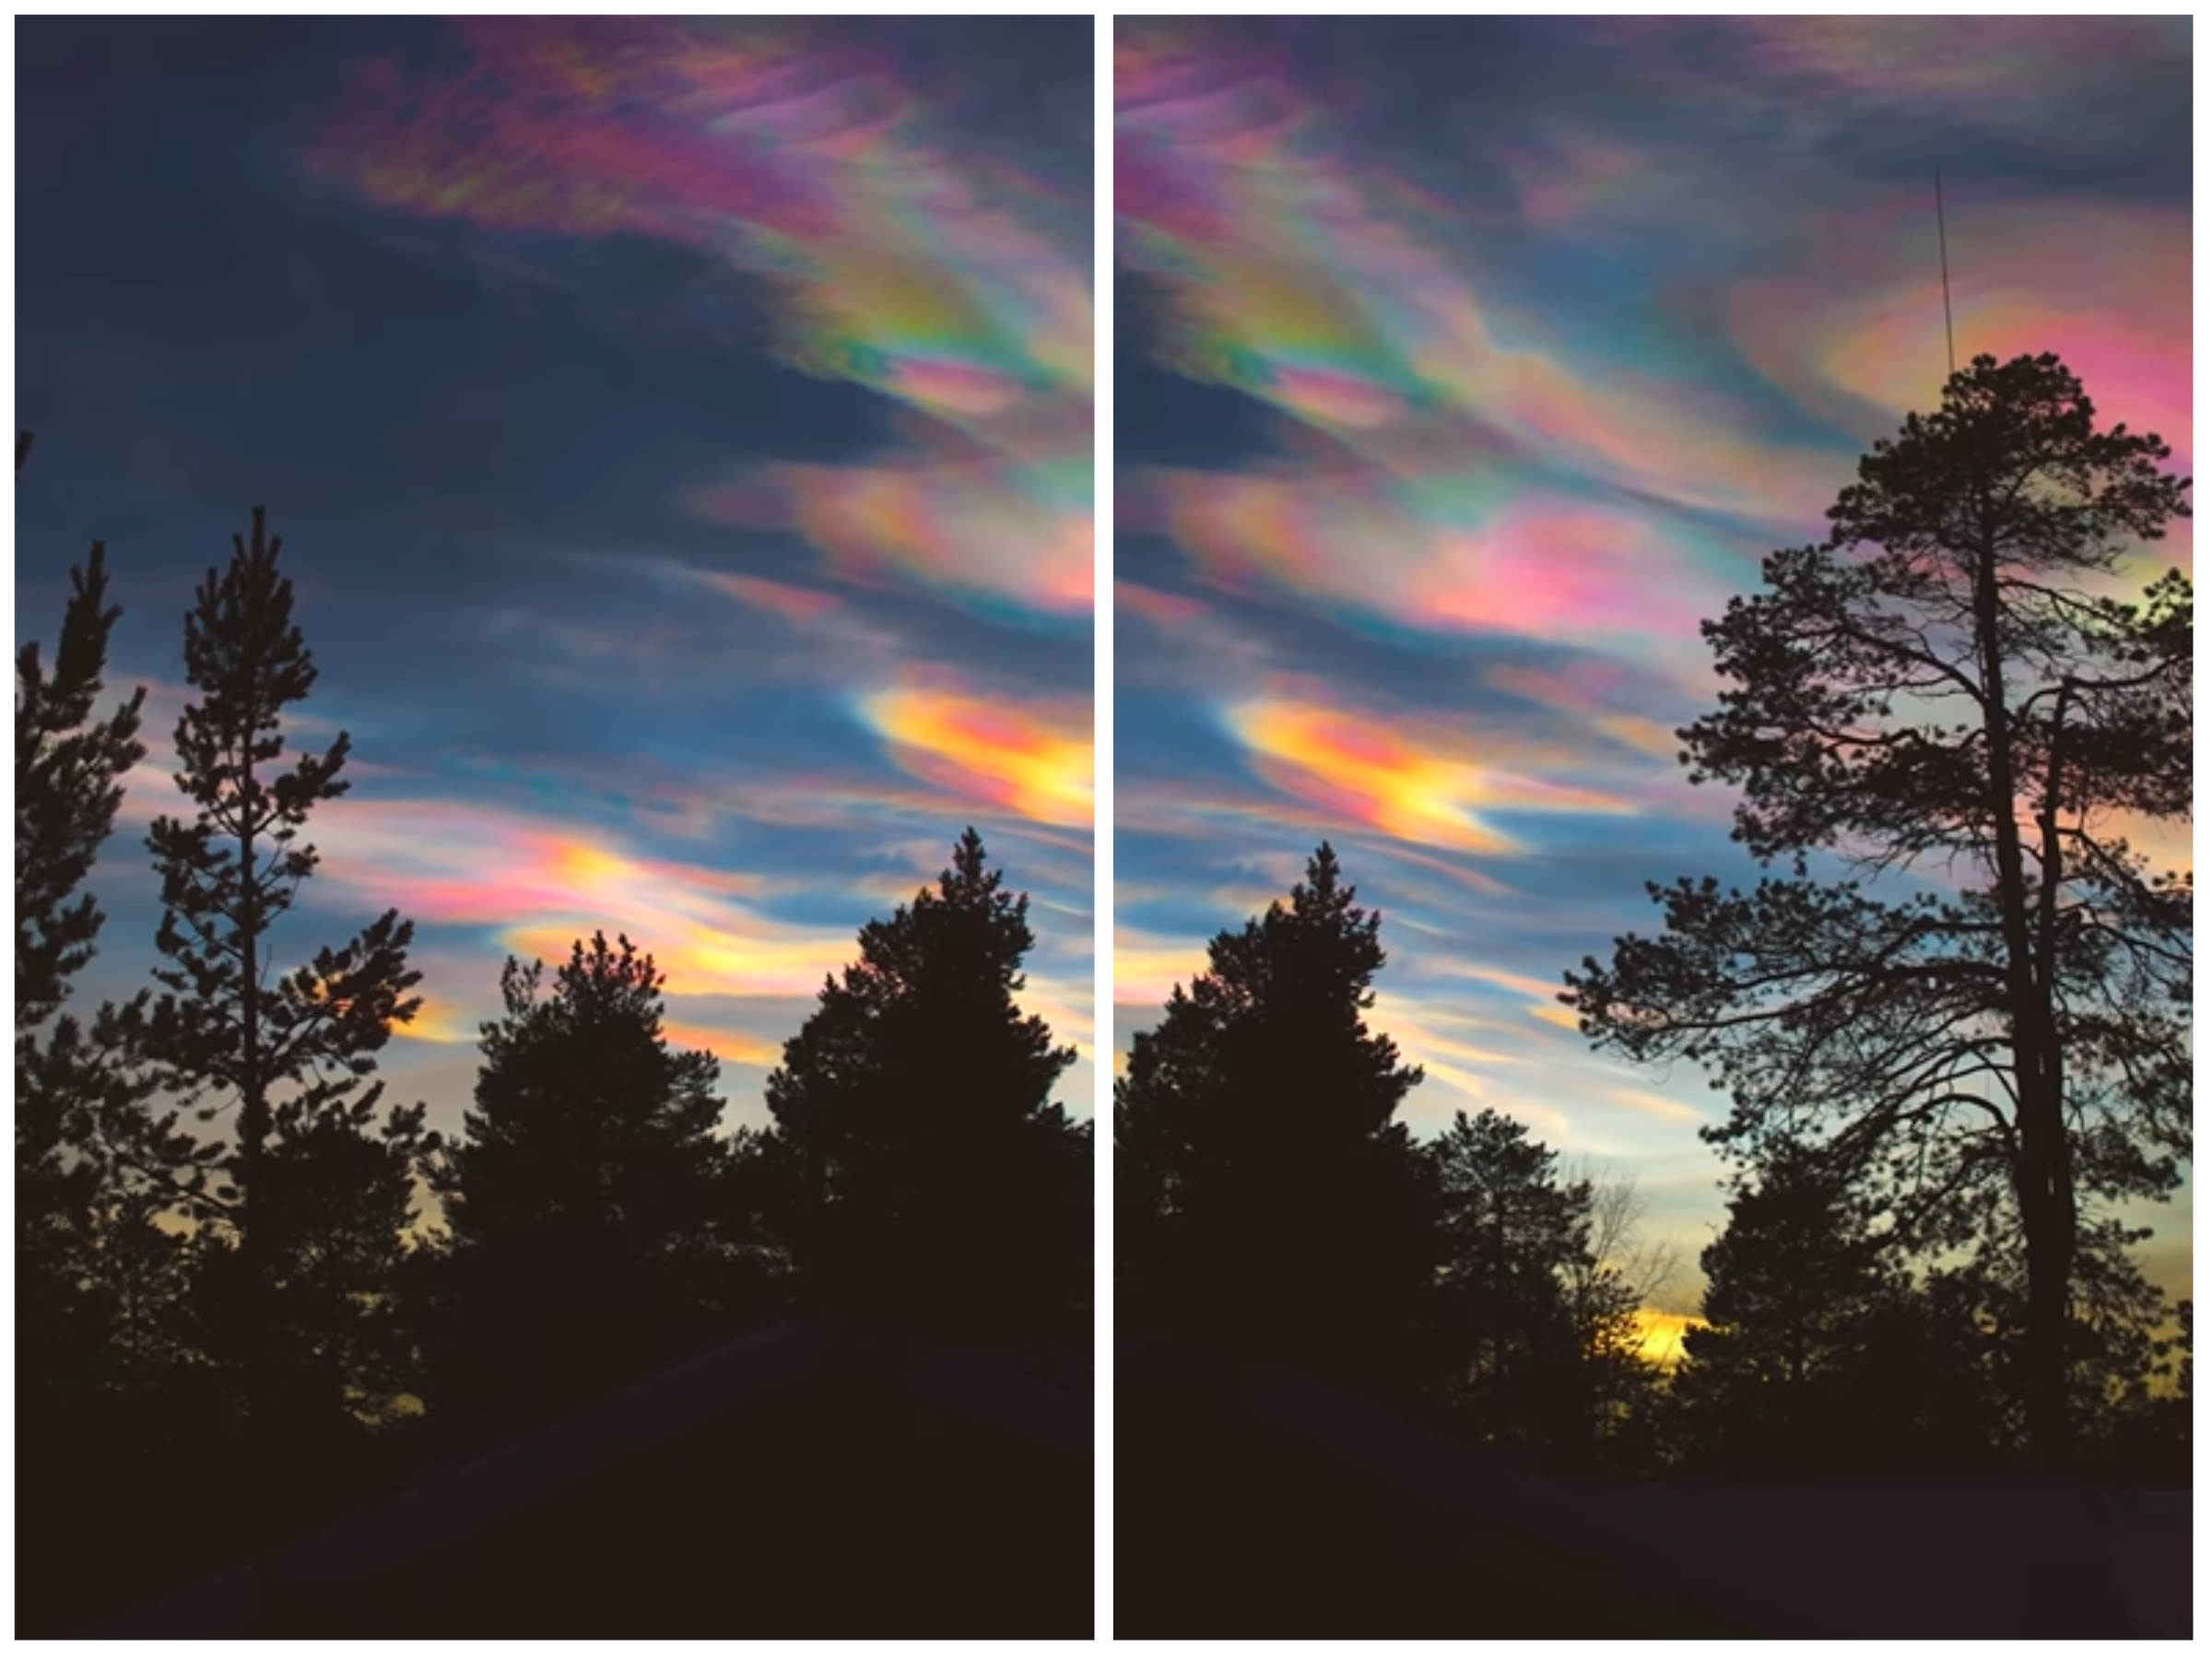 Weird Rainbow Clouds Appear in Sky - TrendRadars